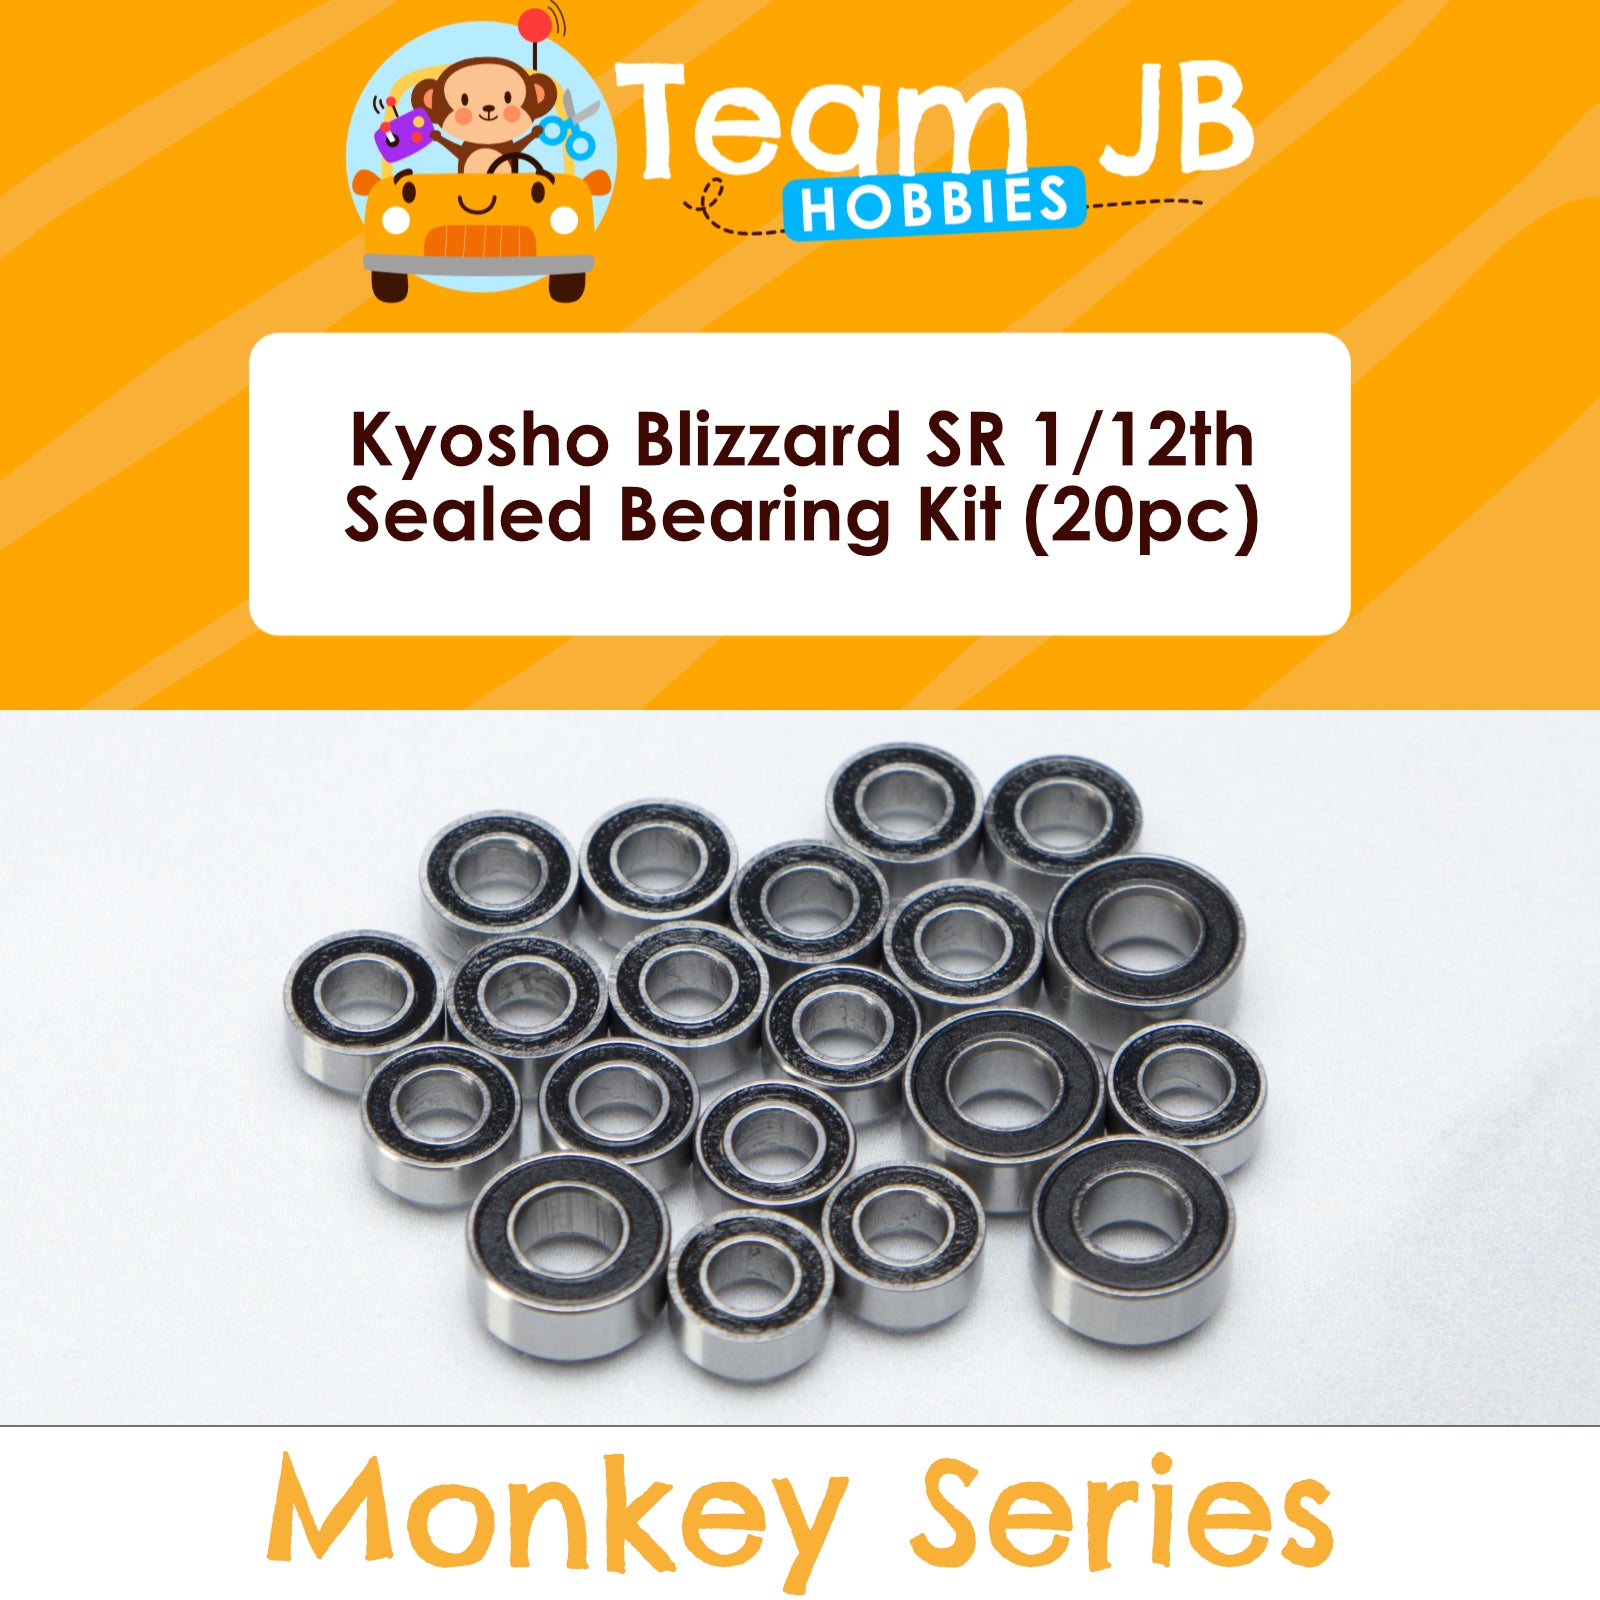 Kyosho Blizzard SR 1/12th - Sealed Bearing Kit